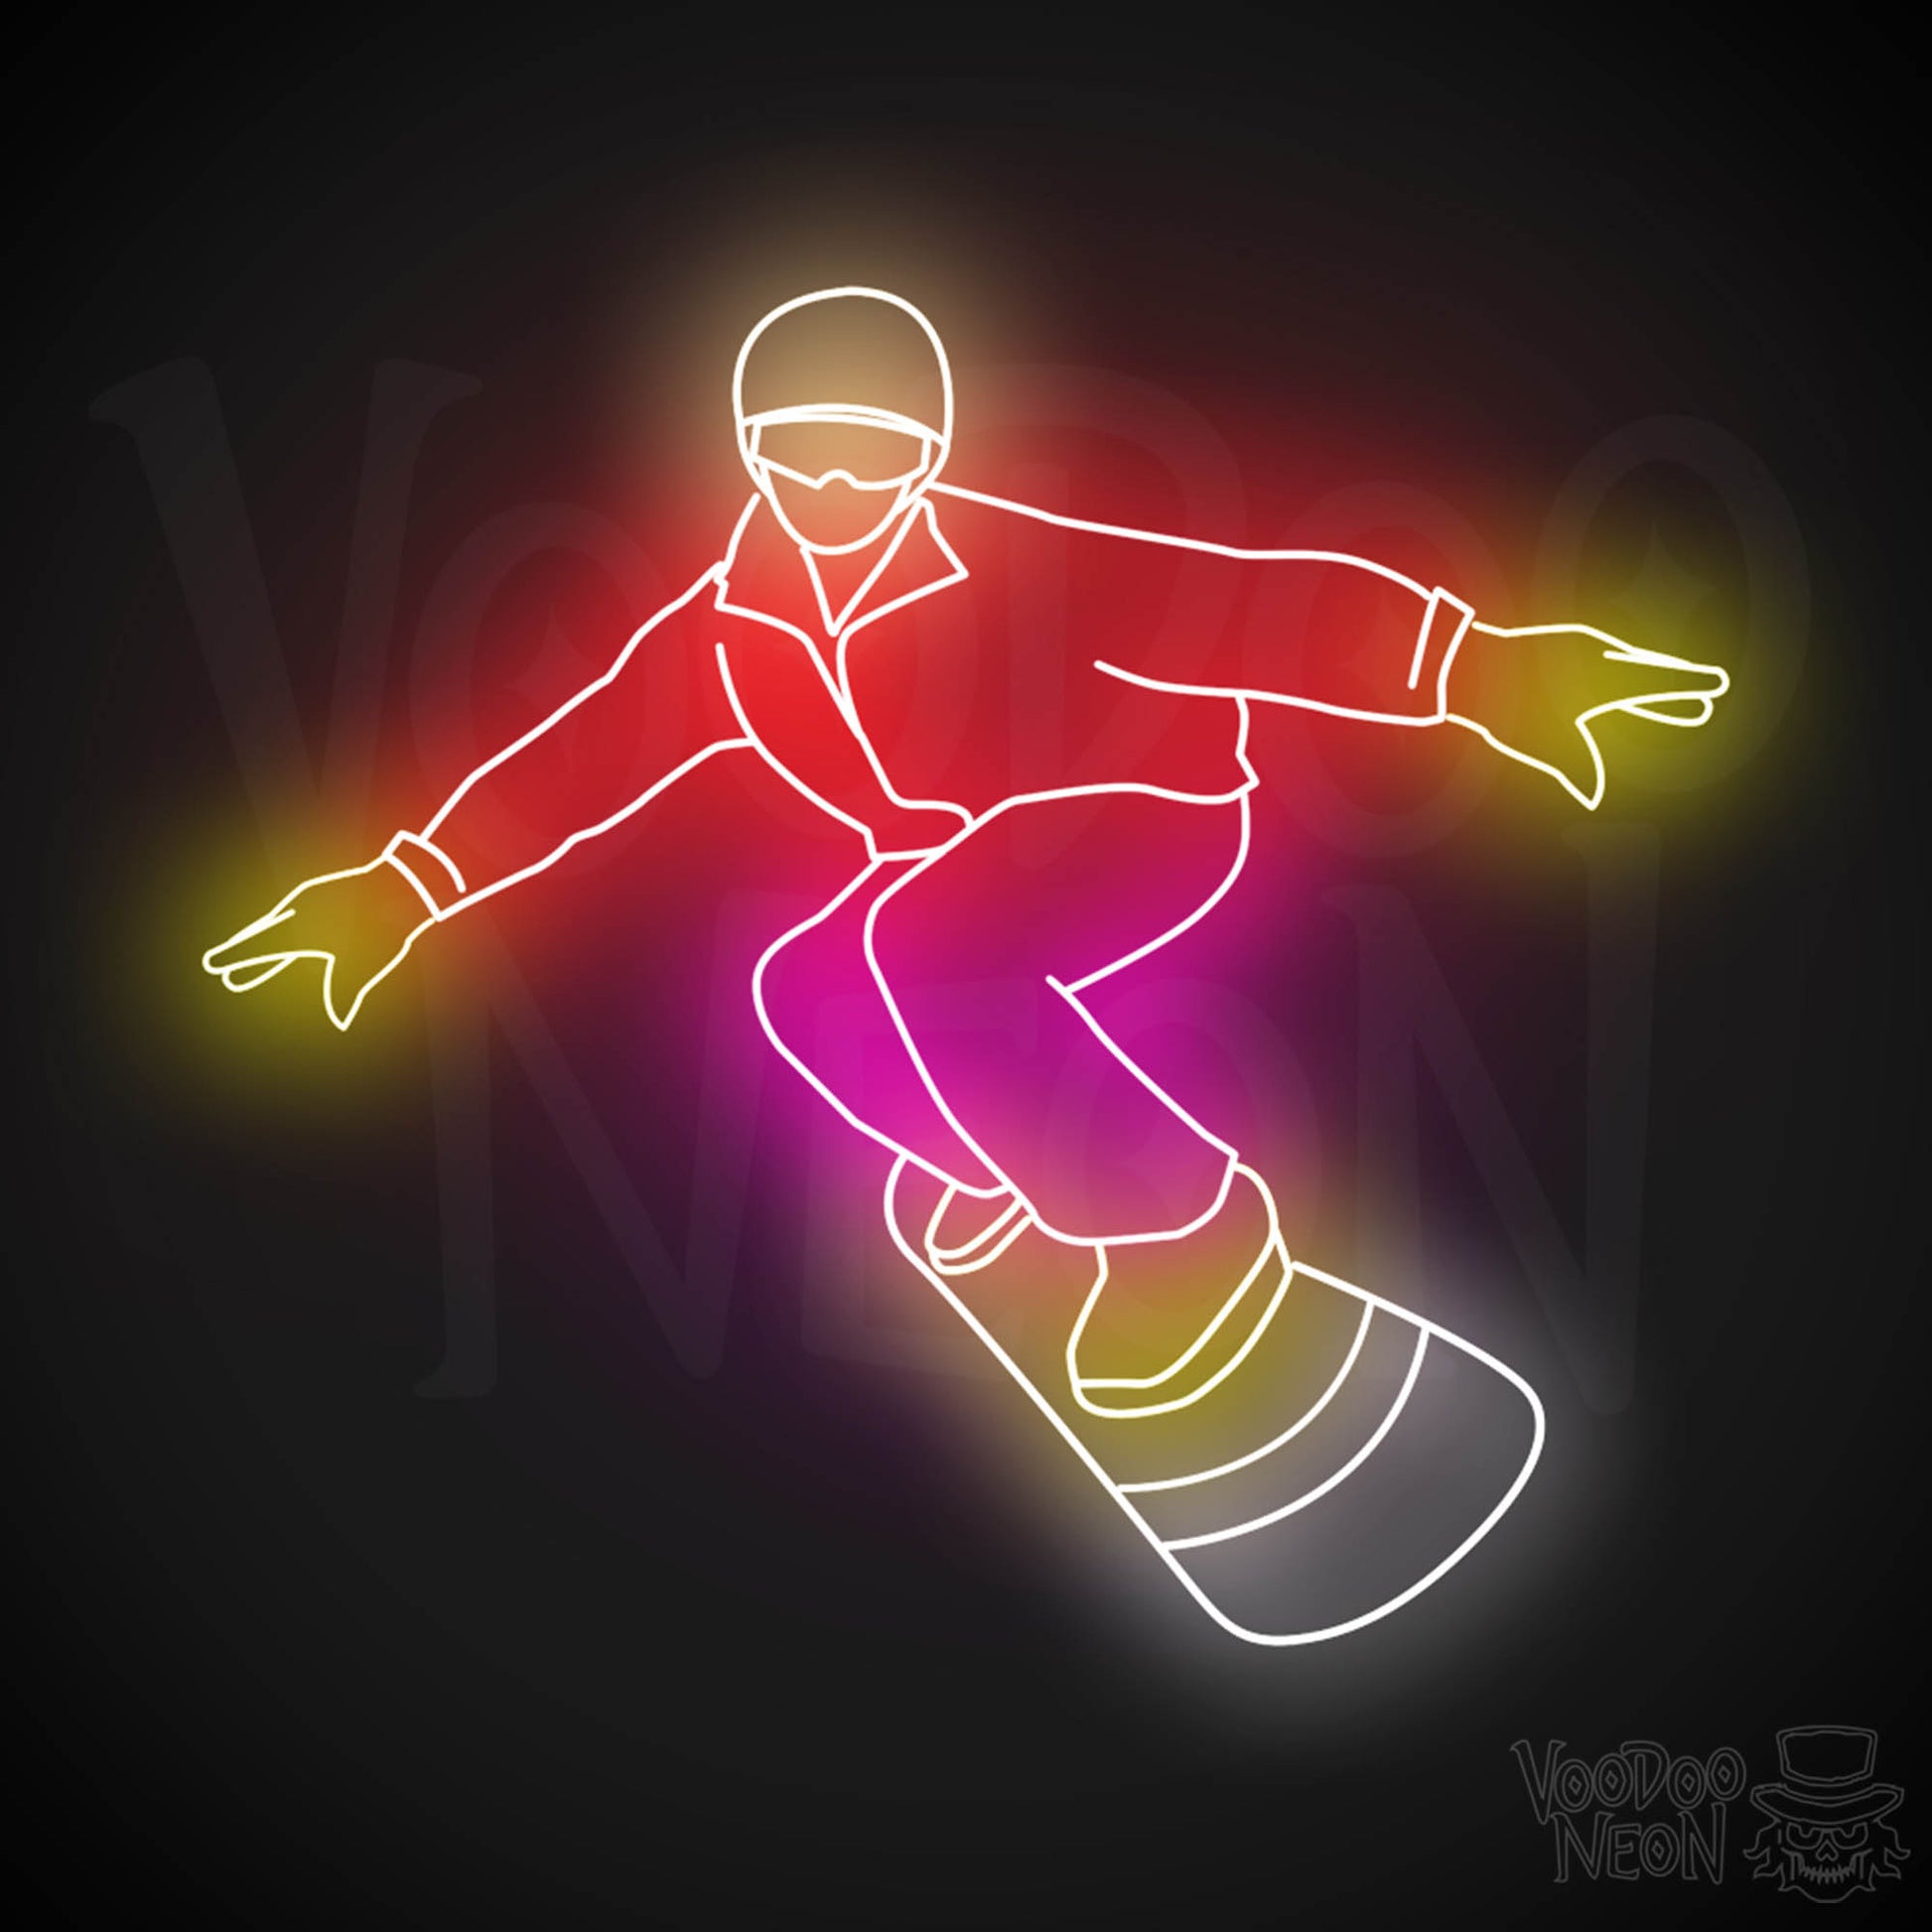 Snowboarding LED Neon - Multi-Color